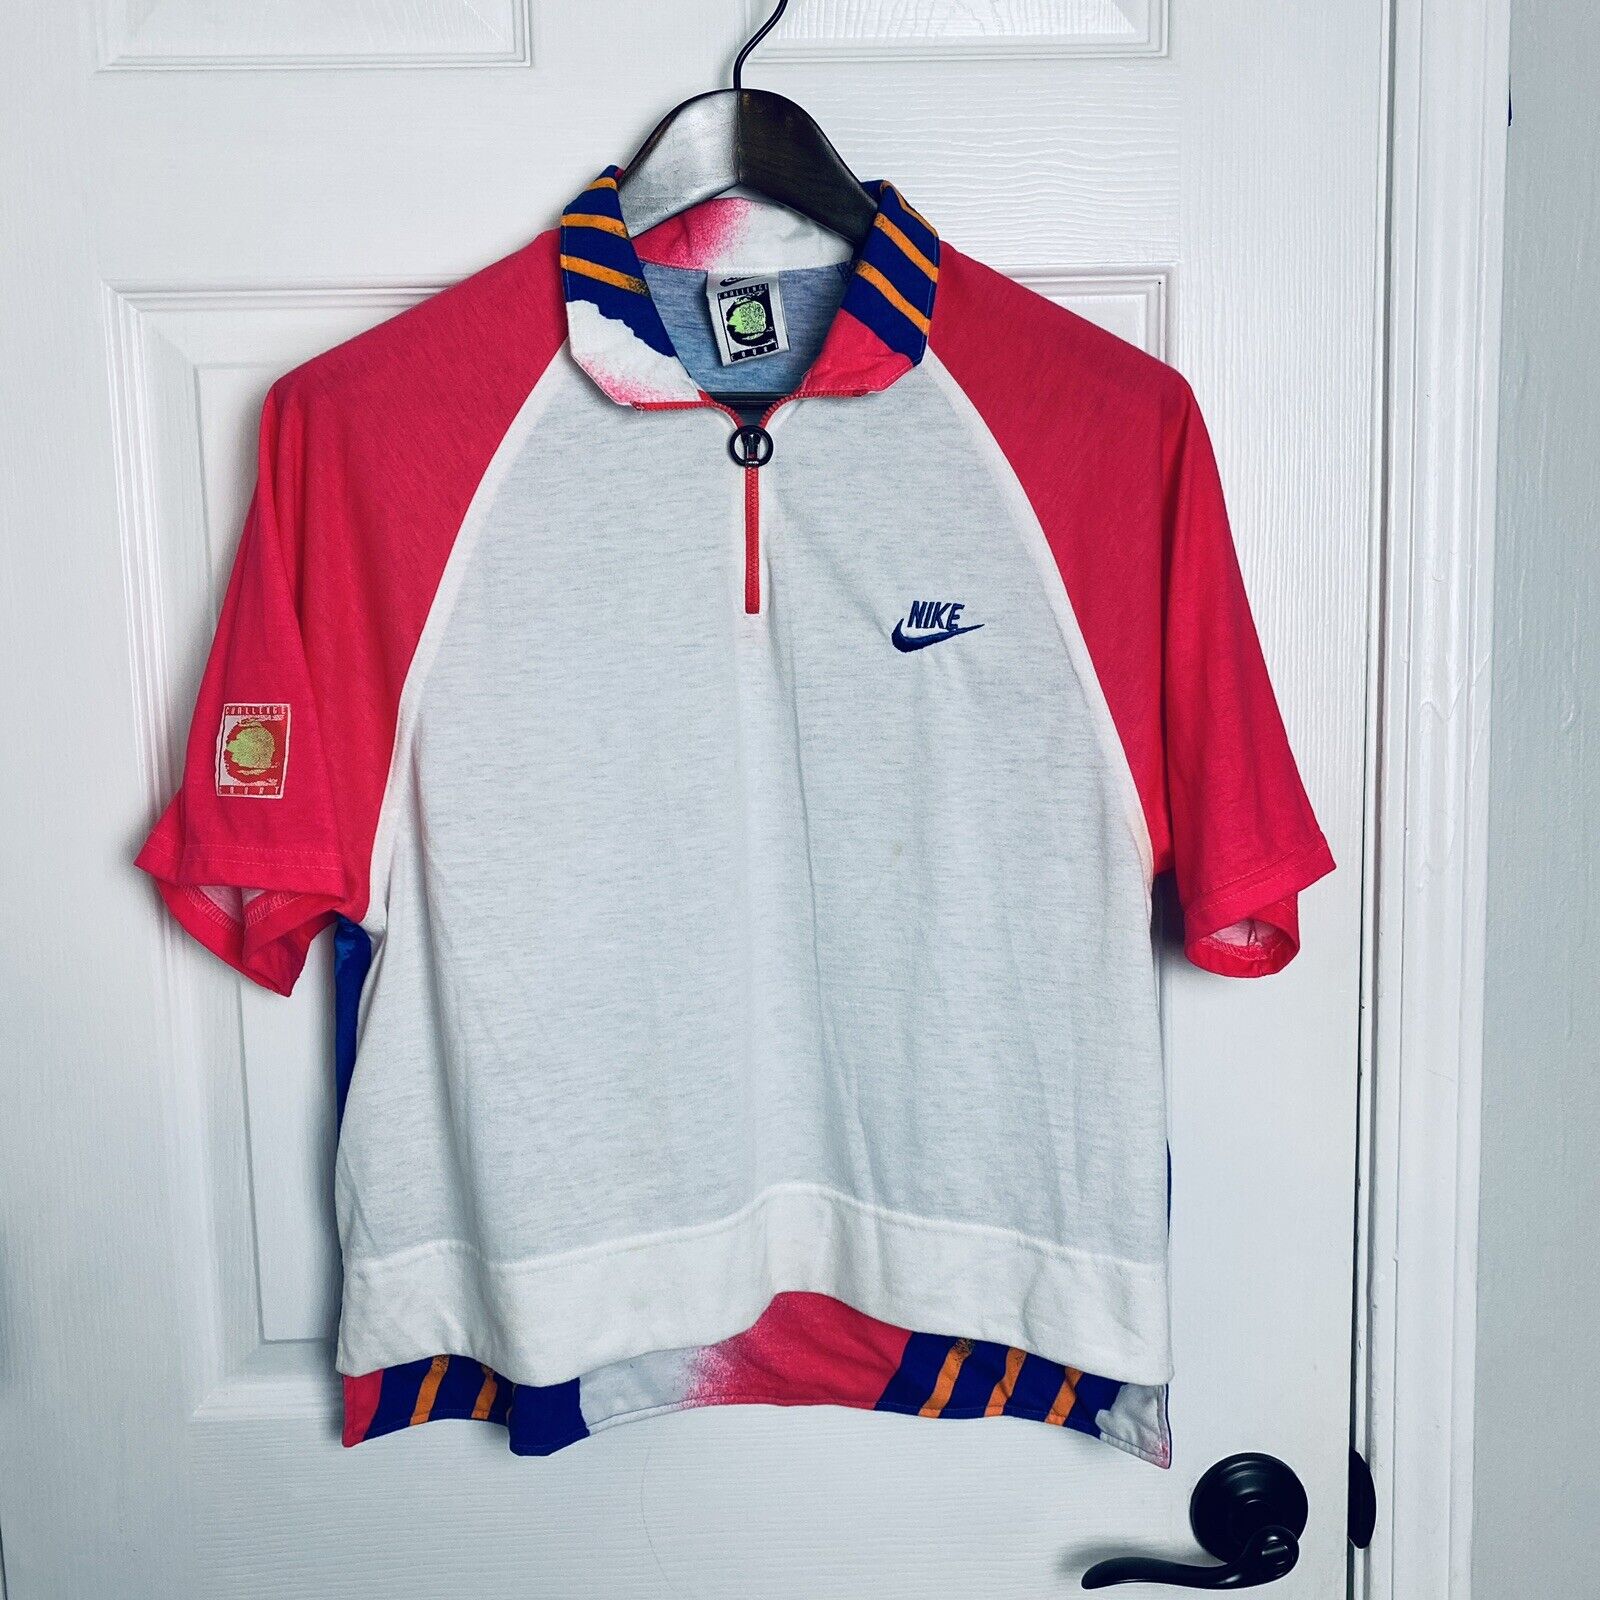 Verscheidenheid Snikken banaan Nike Challenge Court Andre Agassi 1990 Crop Top Tennis Polo Shirt Small  McEnroe | eBay